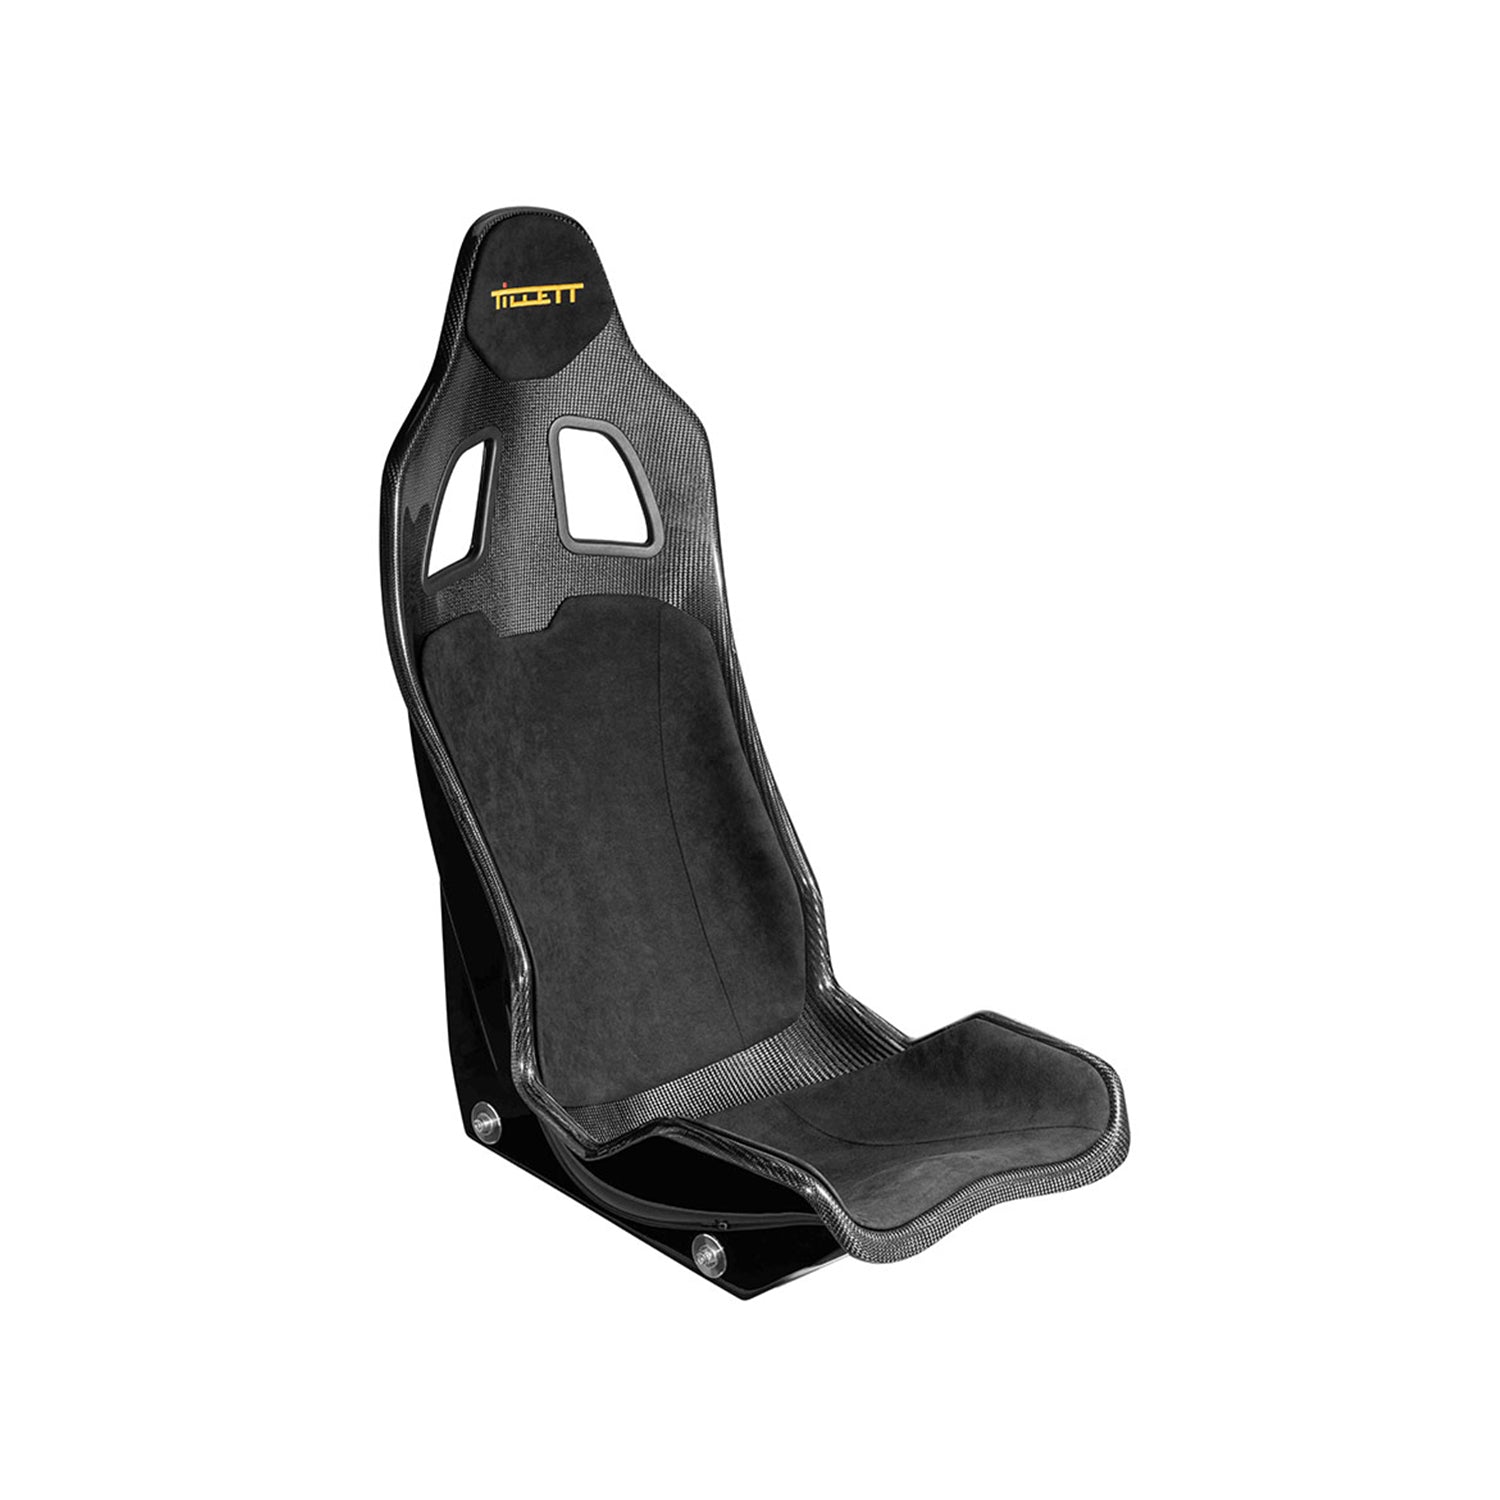 Tillett B10 Racing Seat In Carbon Fibre For Road & Track